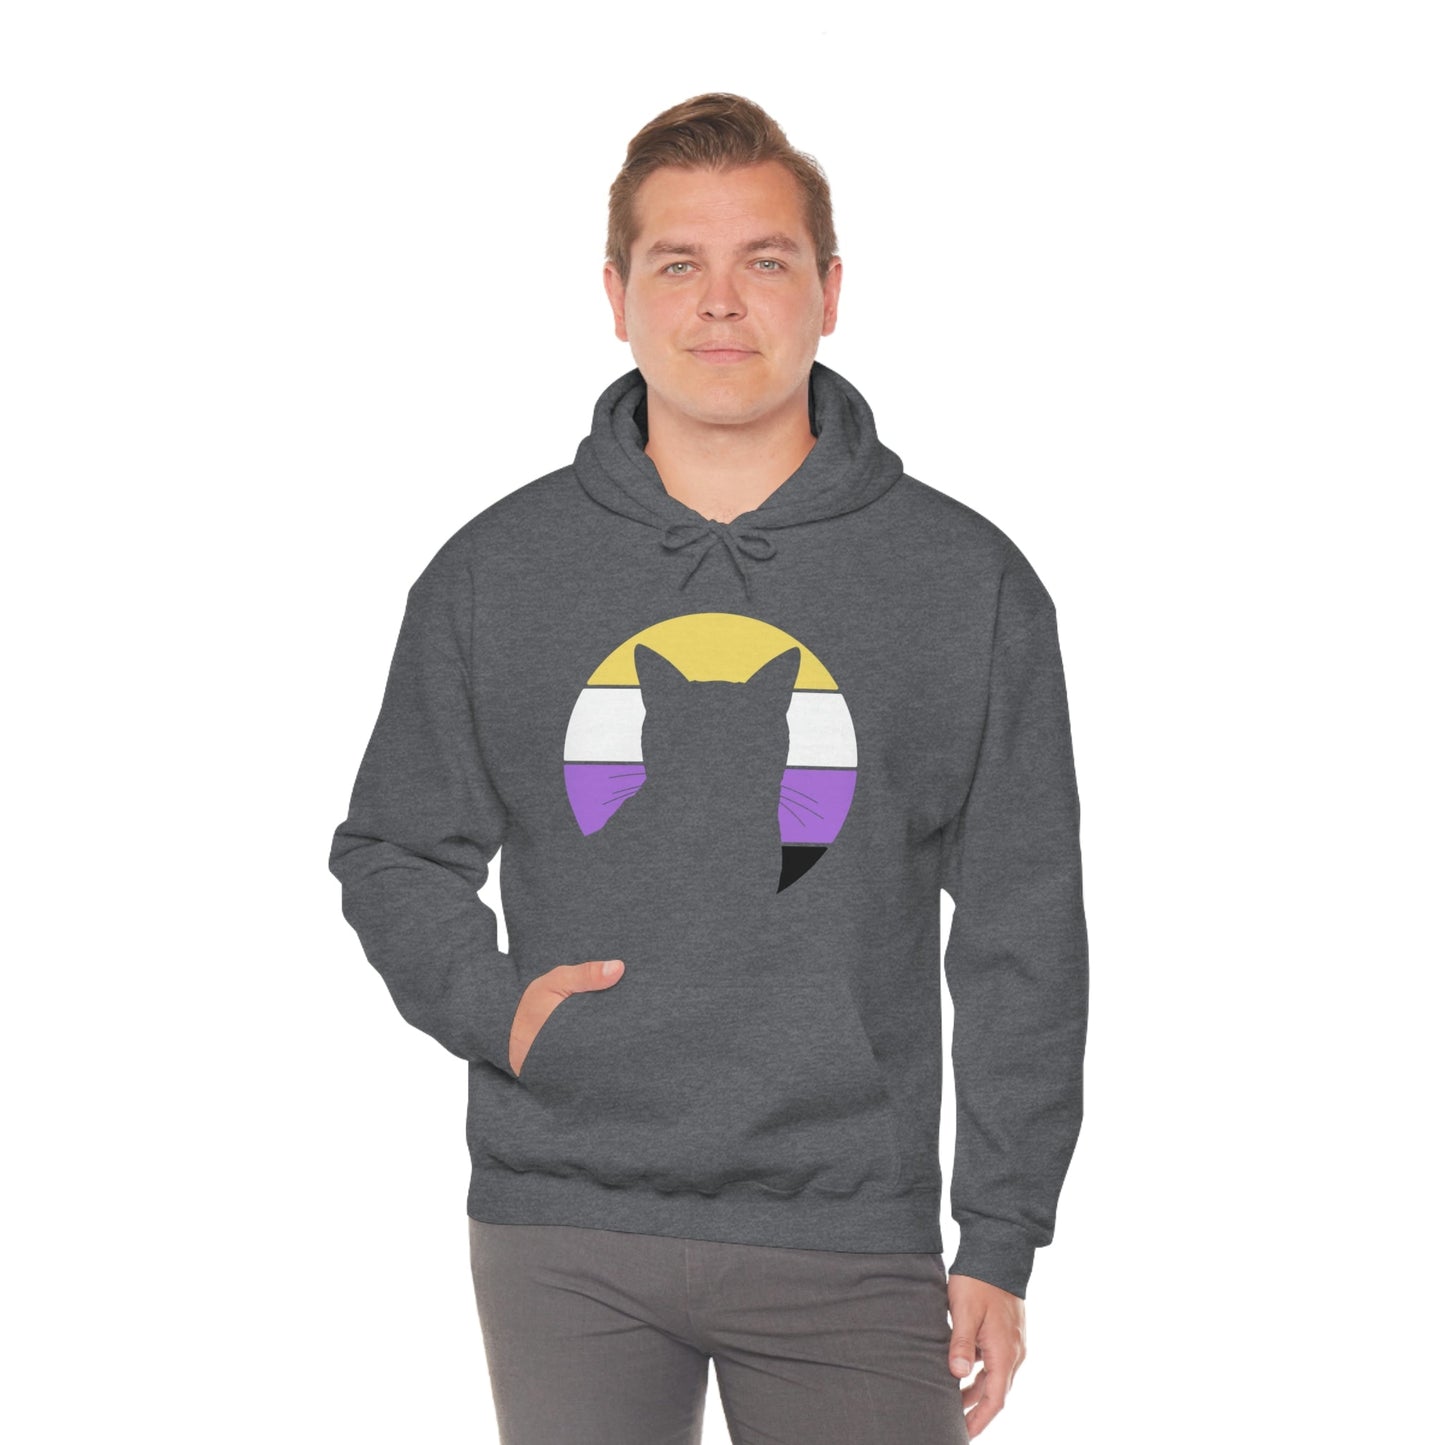 Nonbinary Pride | Cat Silhouette | Hooded Sweatshirt - Detezi Designs-17402383322271374641